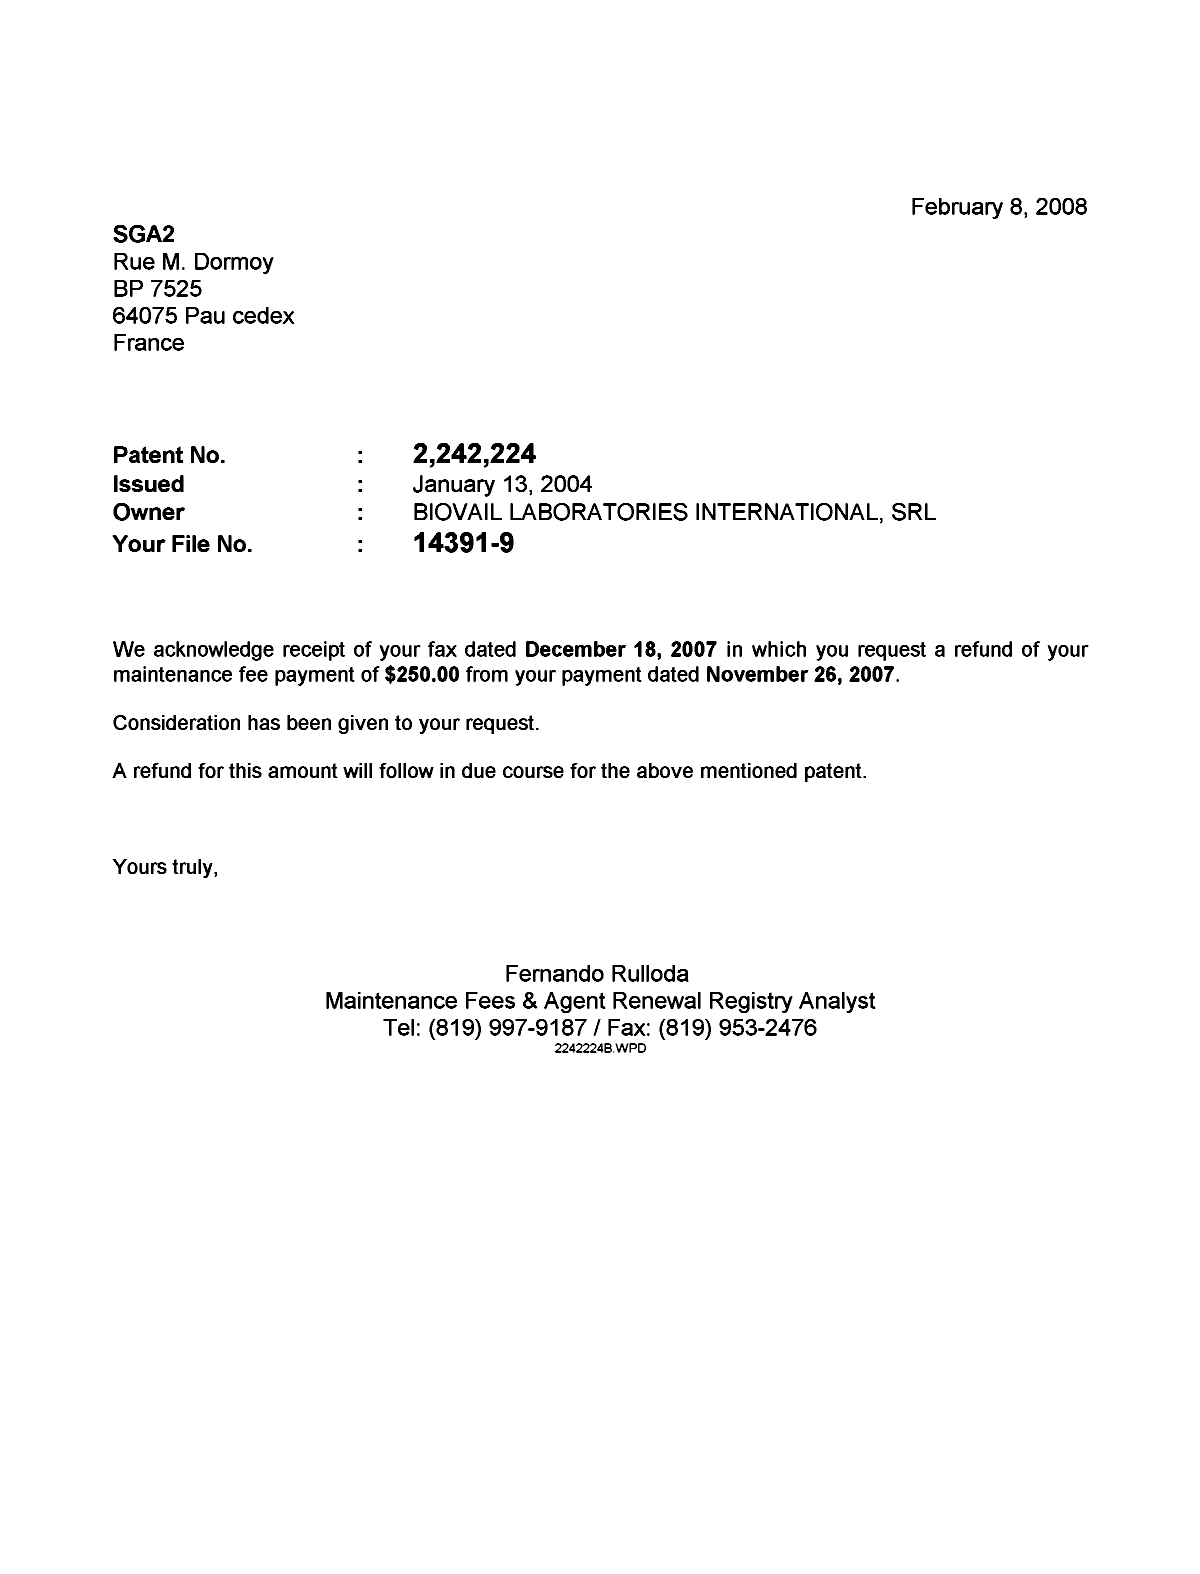 Canadian Patent Document 2242224. Correspondence 20071208. Image 1 of 1